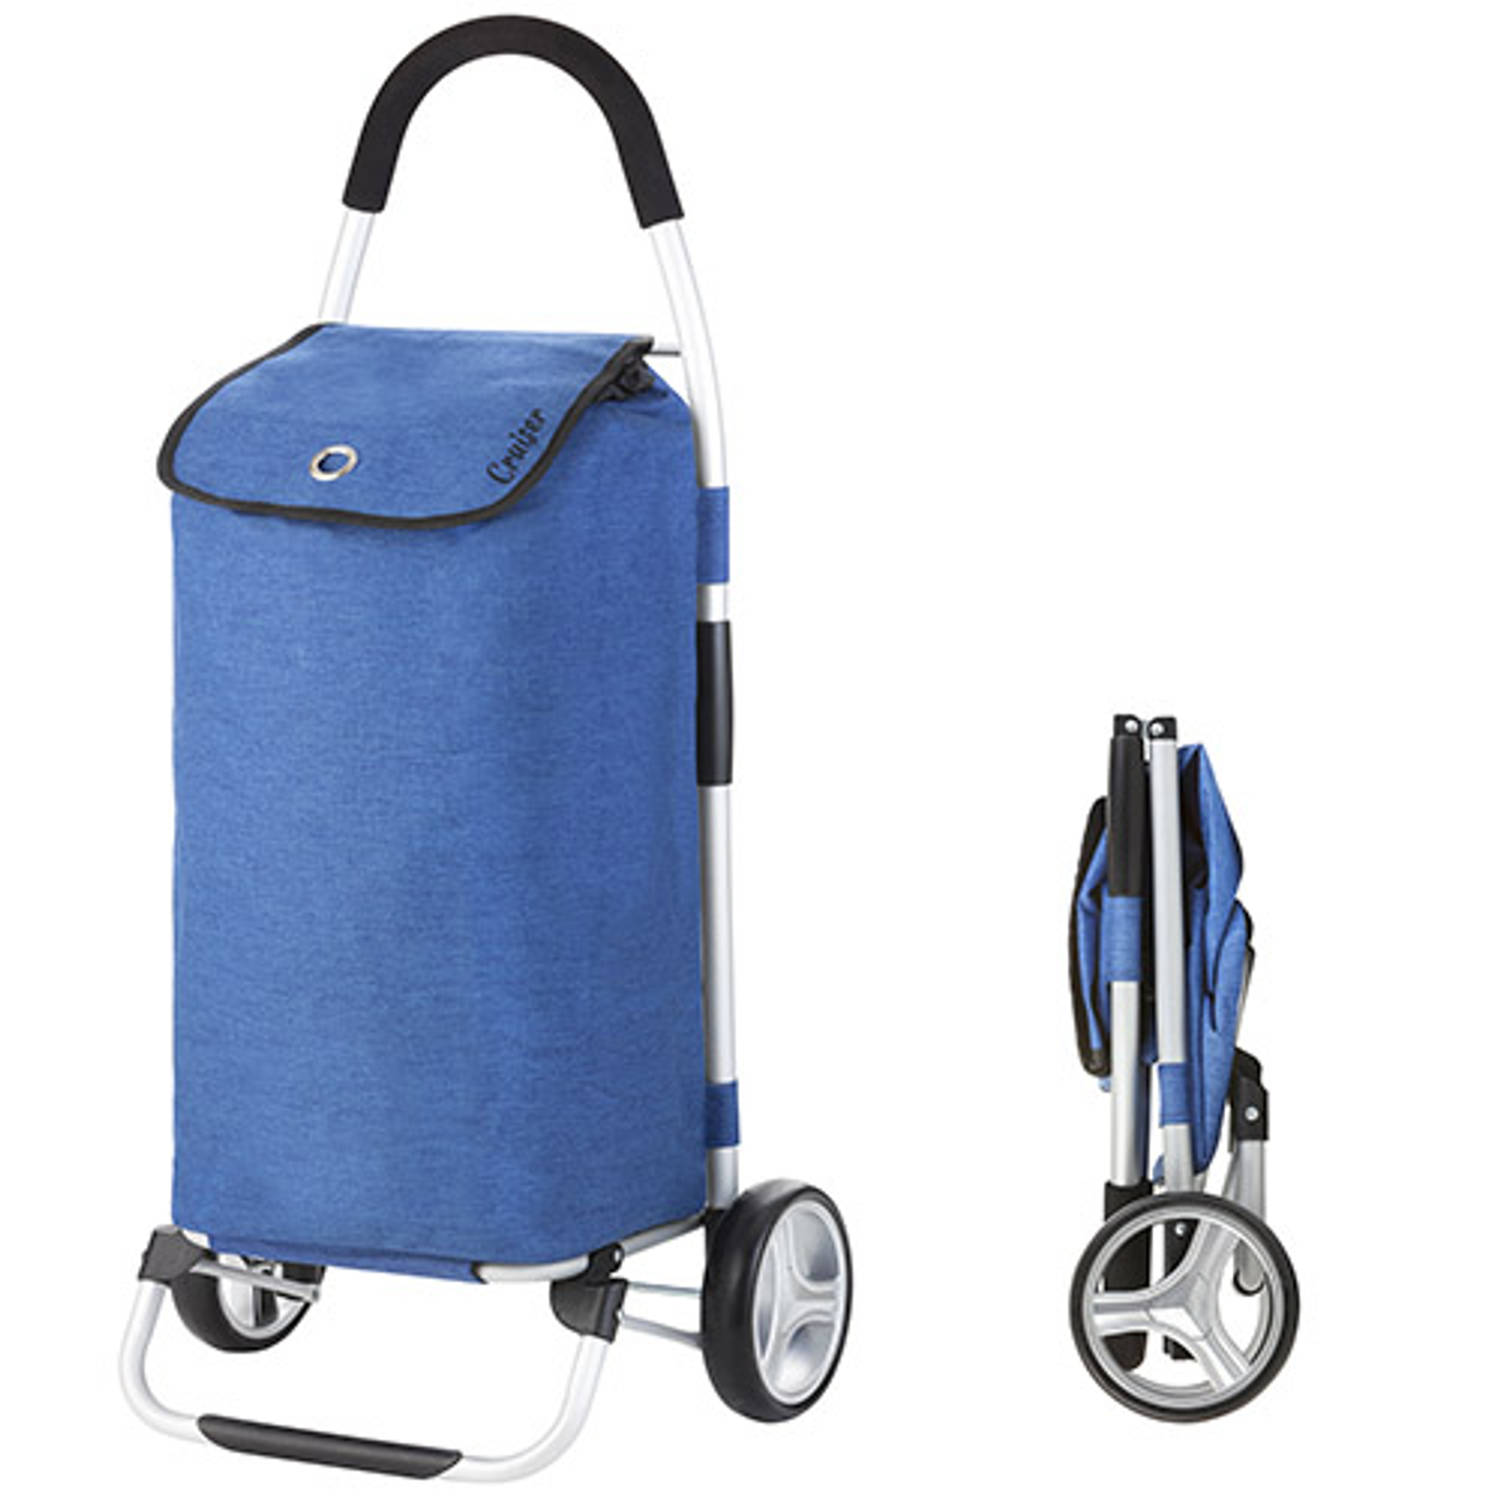 ShoppingCruiser Foldable Boodschappentrolley - Opvouwbare boodschappenwagen liter - Blauw | Blokker